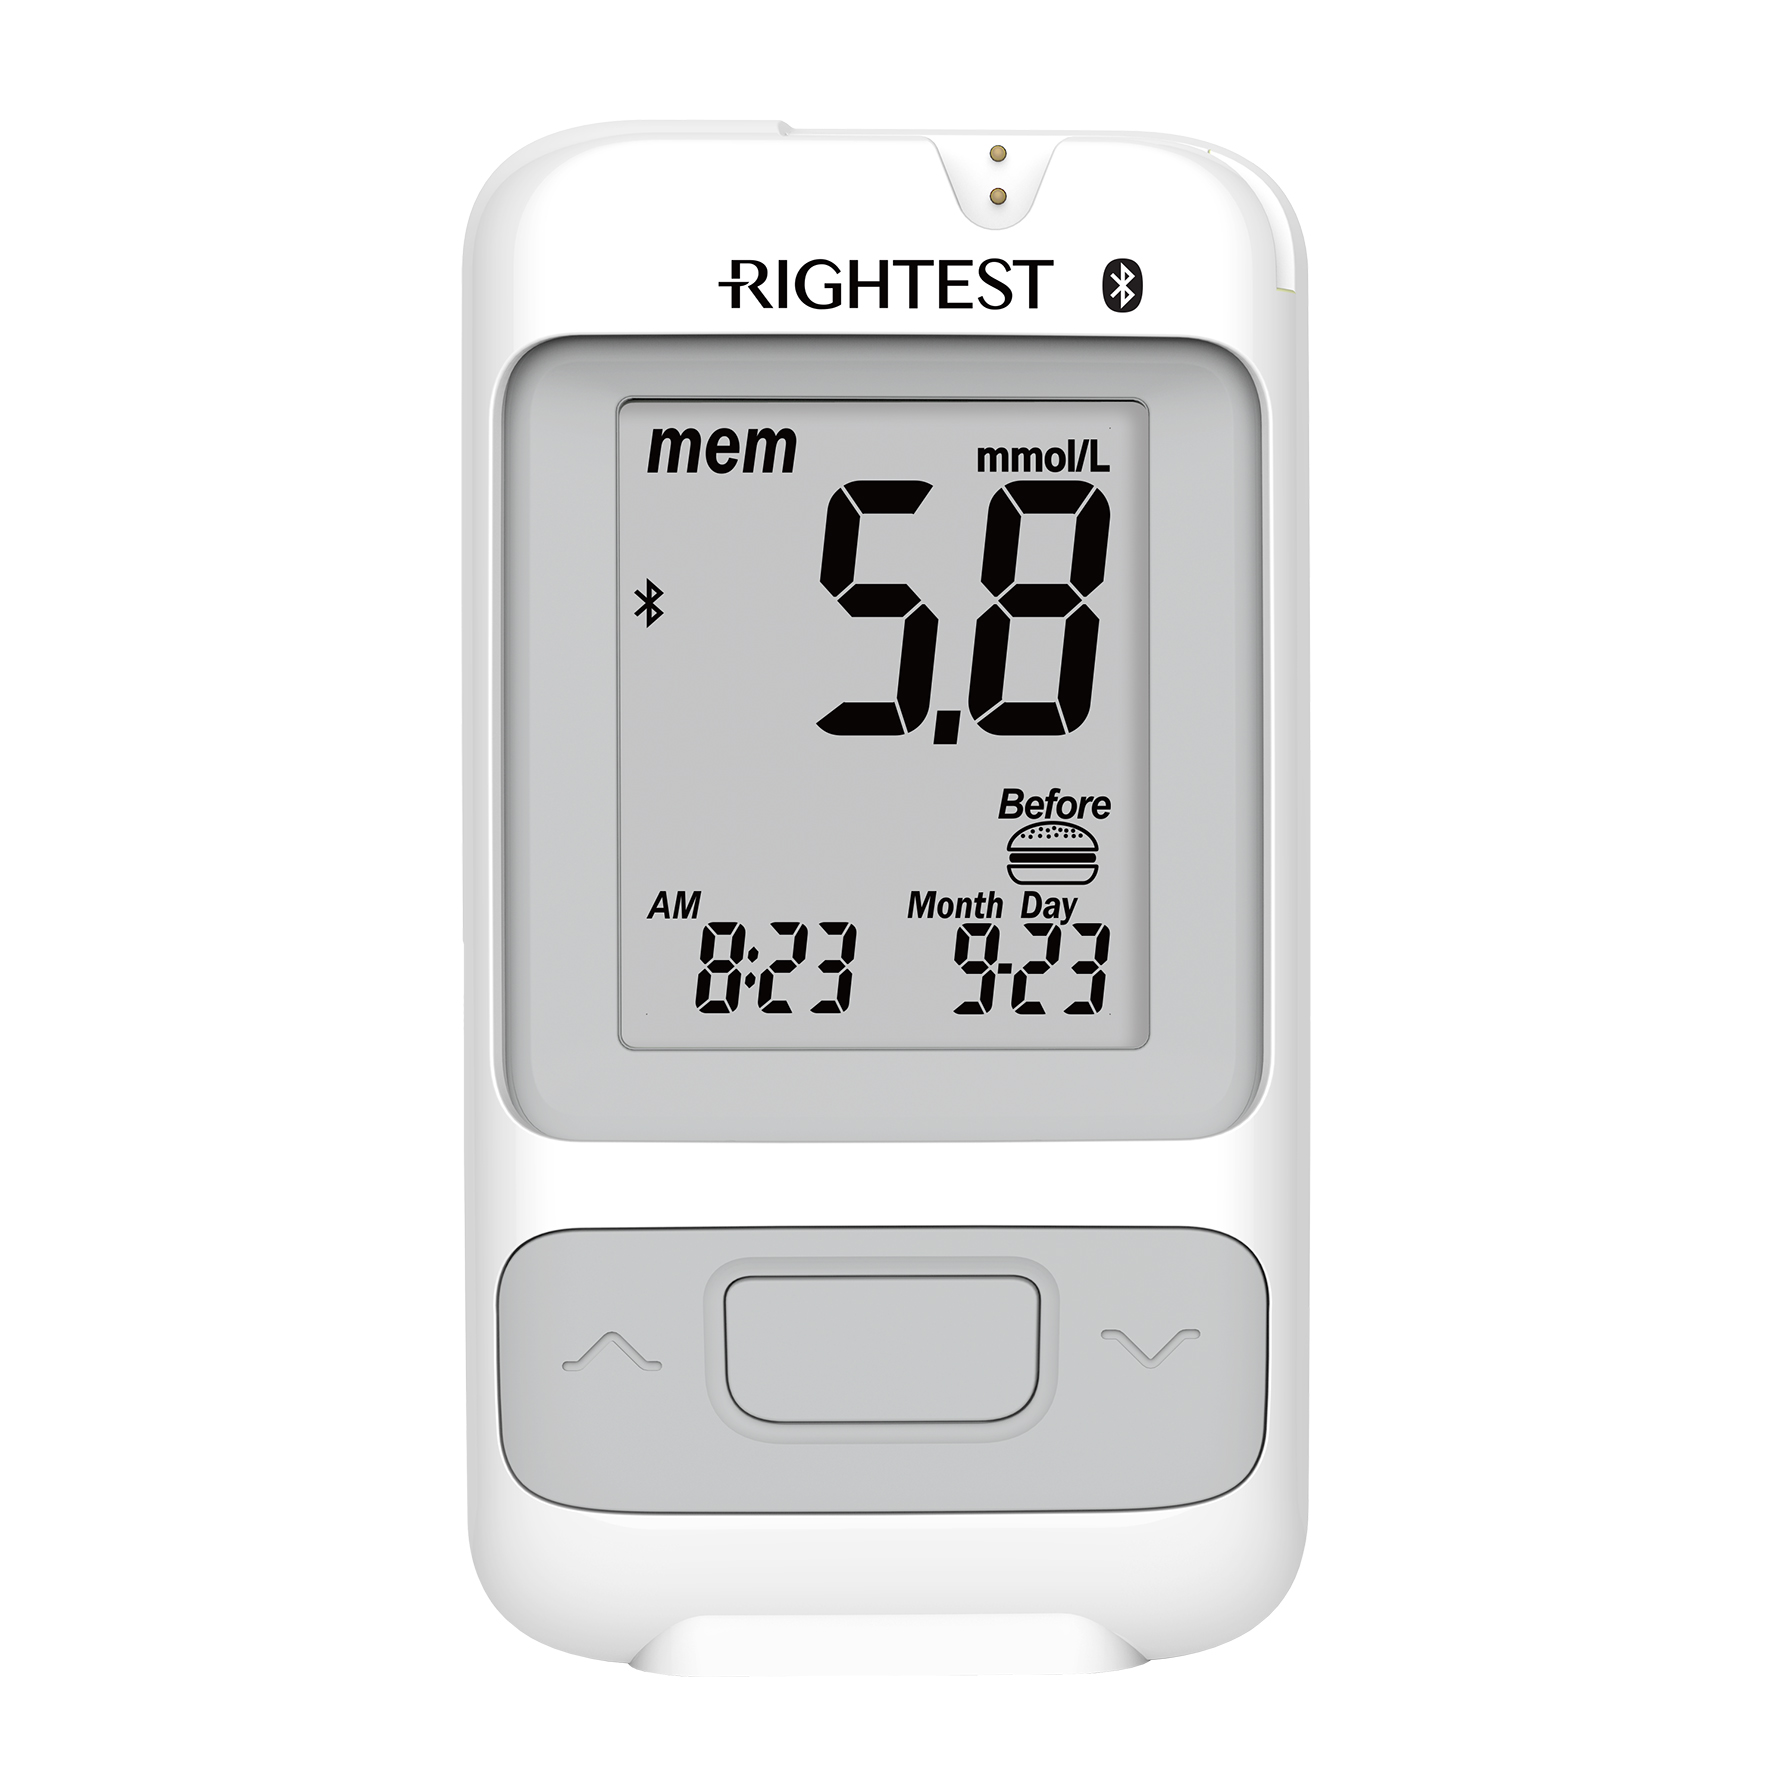 Rightest Bluetooth Blood Glucose Monitoring System 
GM700SB / Bionime Corporation